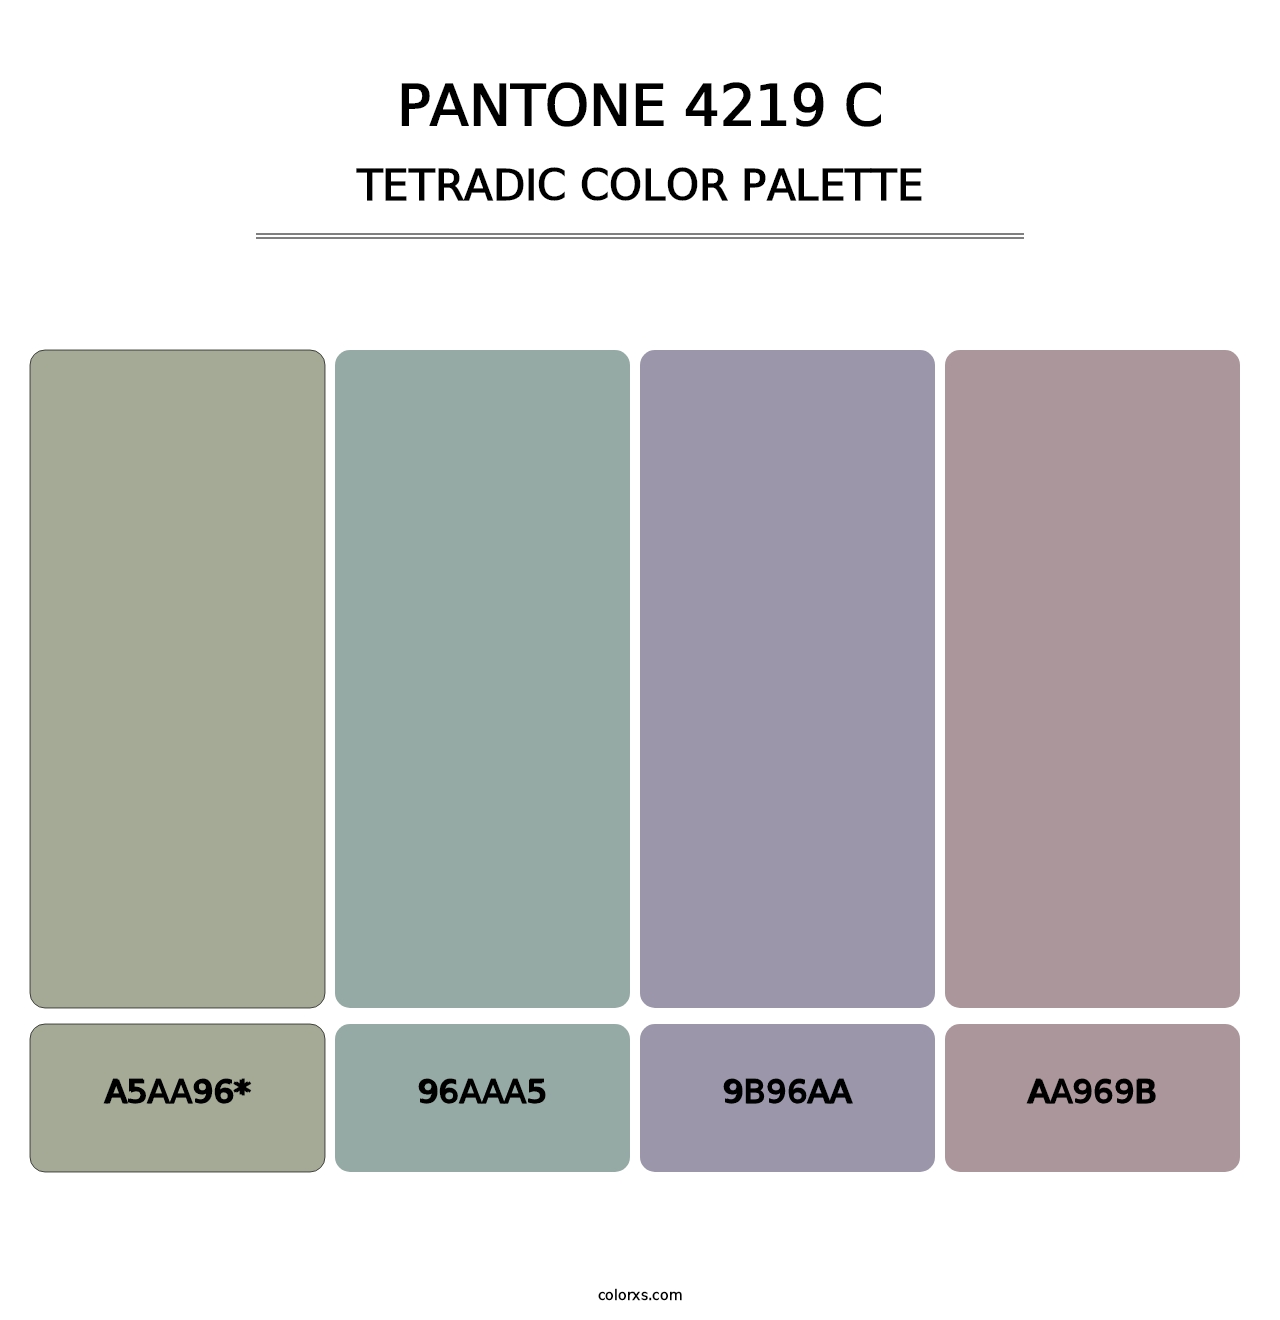 PANTONE 4219 C - Tetradic Color Palette